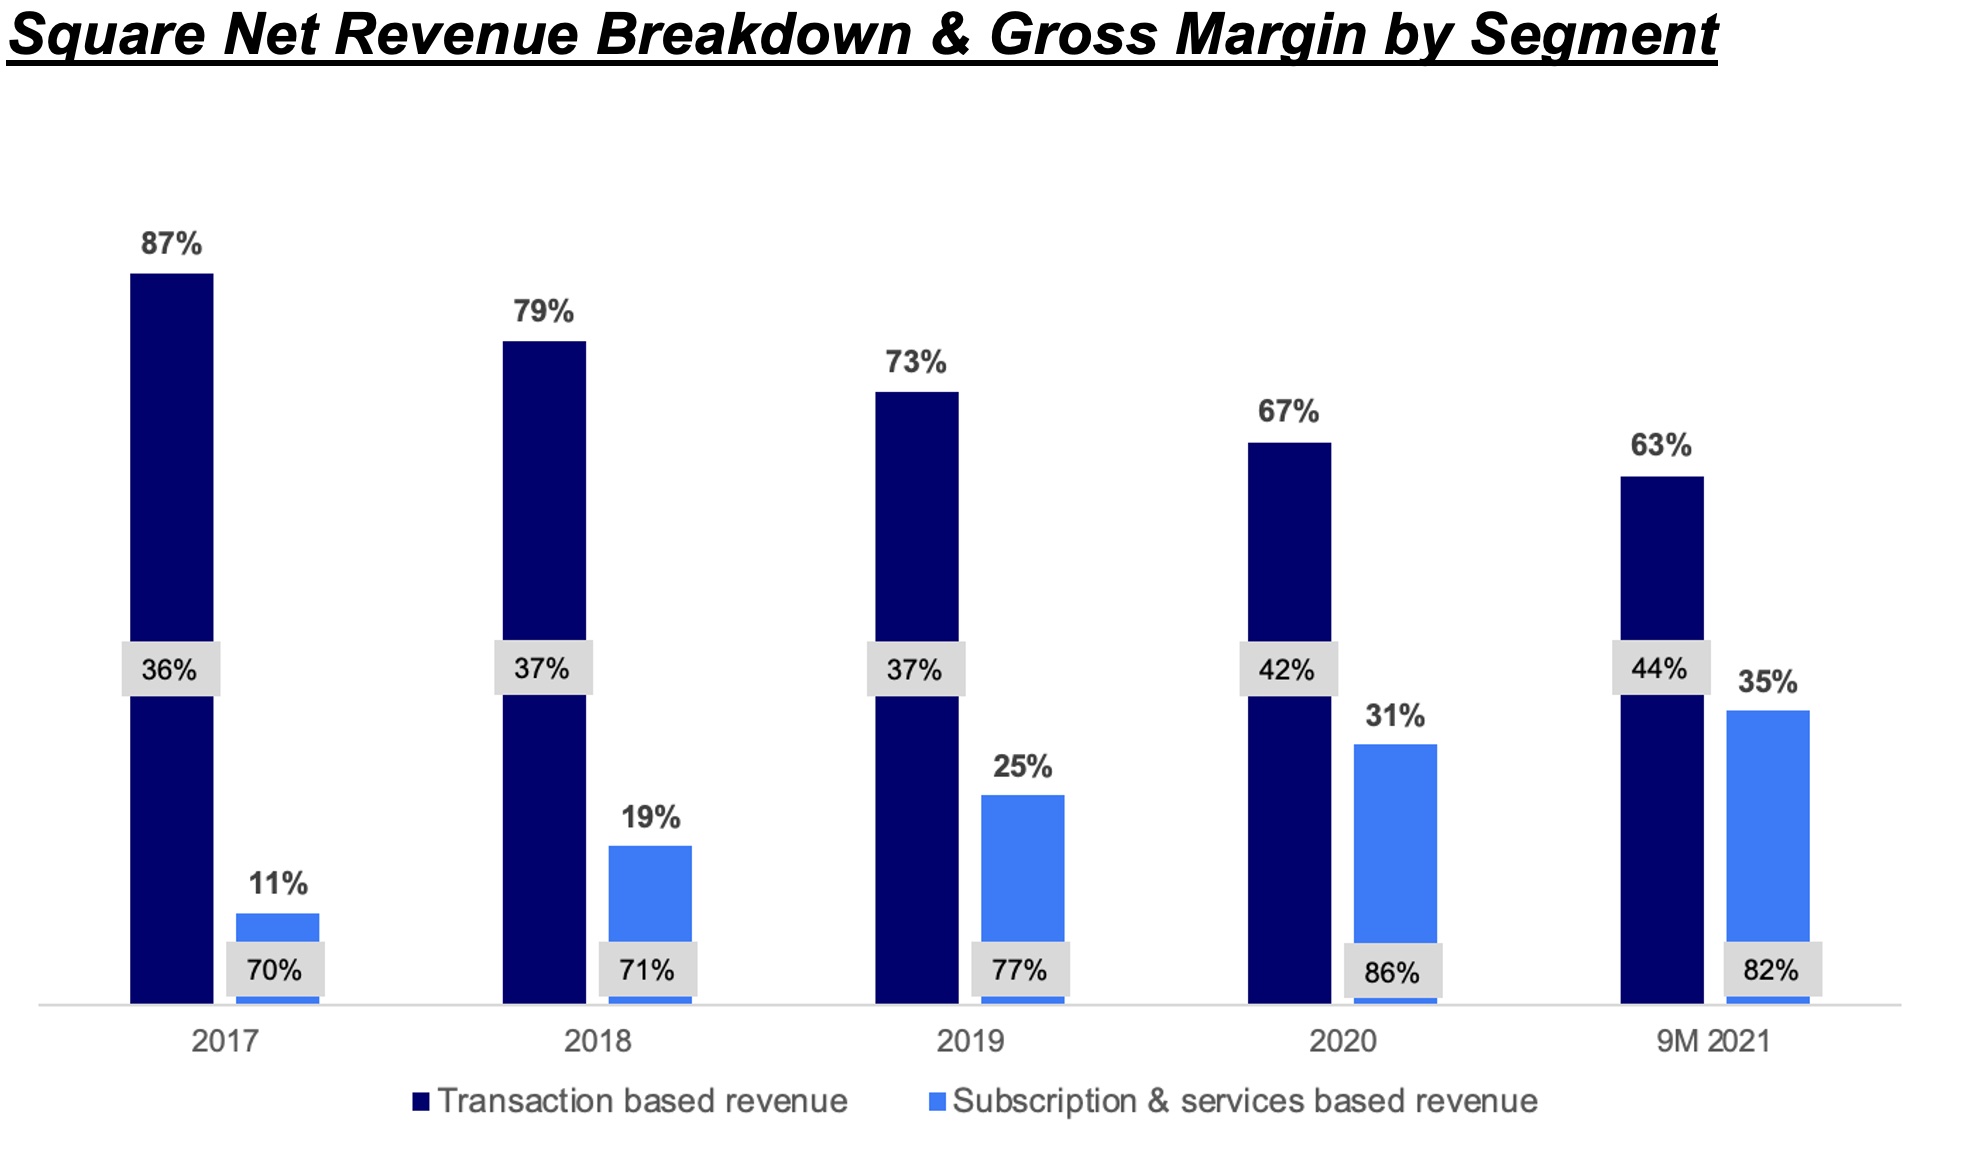 Square's net revenue breakdown and gross margin by segment